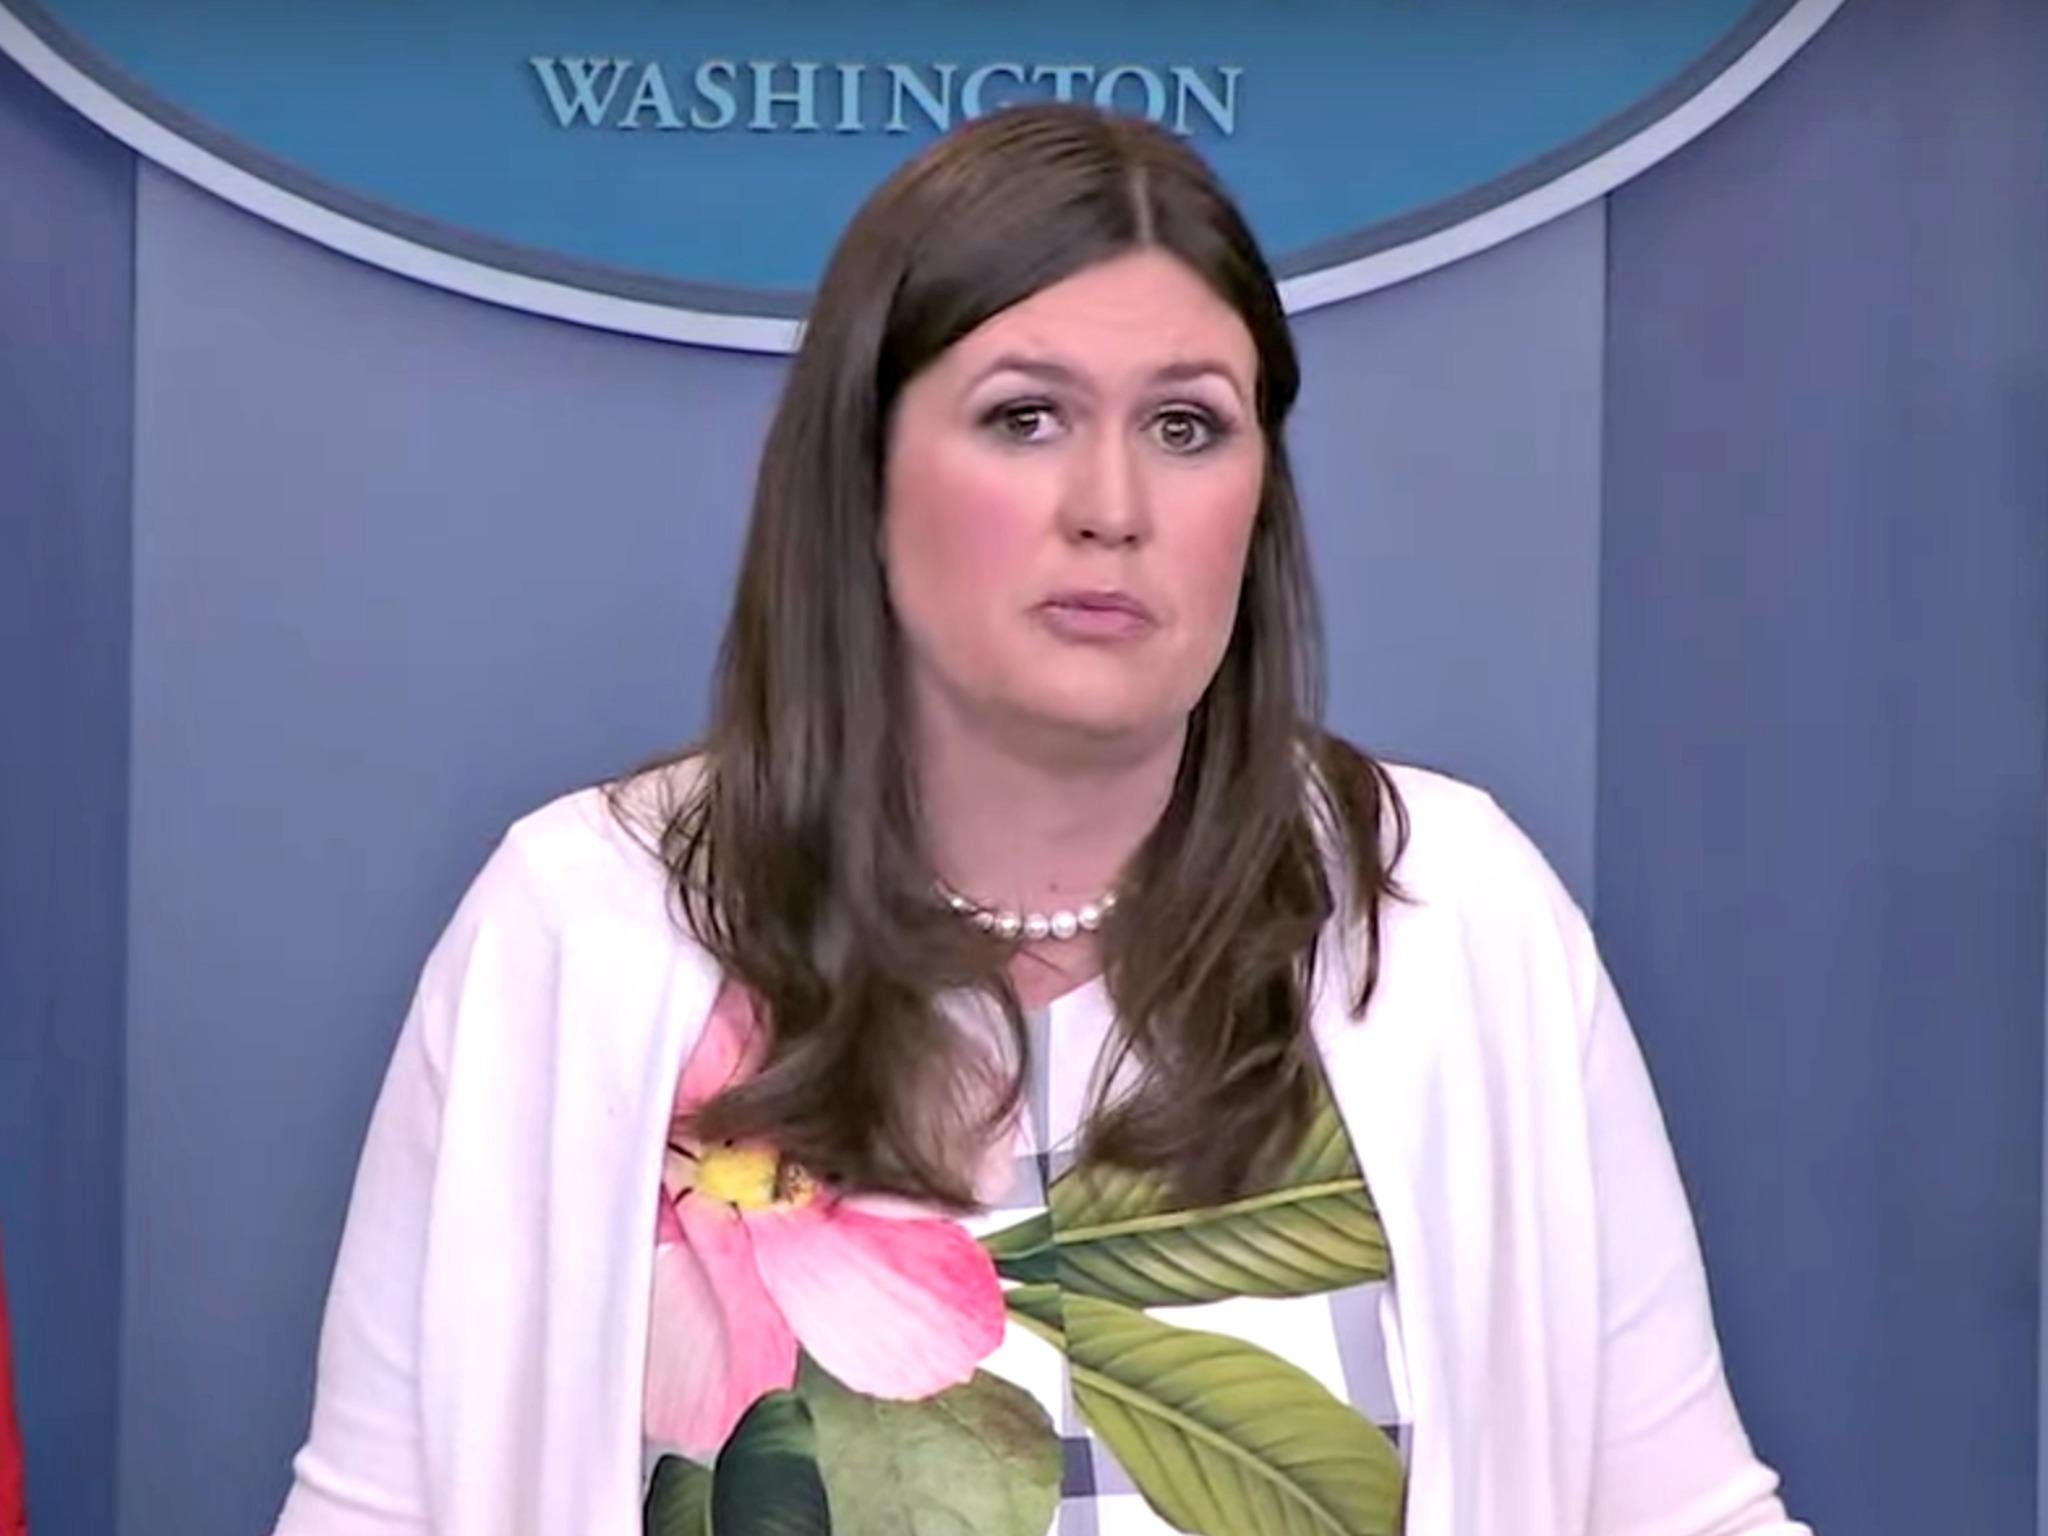 White House Deputy Press Secretary Sarah Huckabee Sanders defends Donald Trump's tweets at a press conference